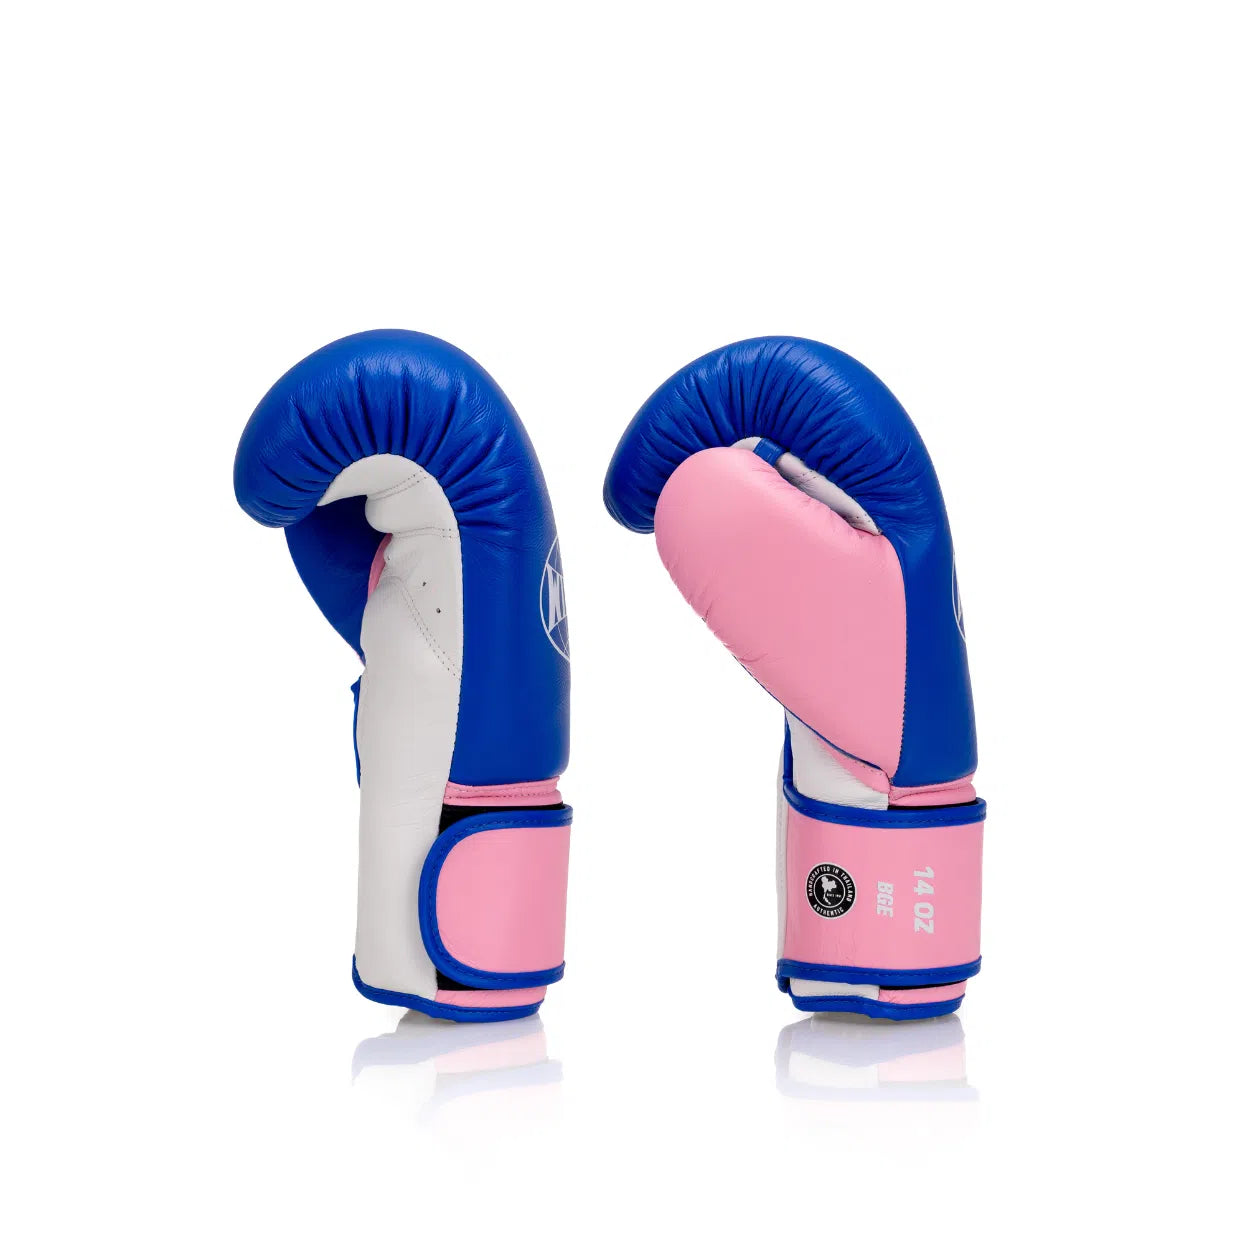 Elite Series Velcro Boxing Glove - Black/Pink/White